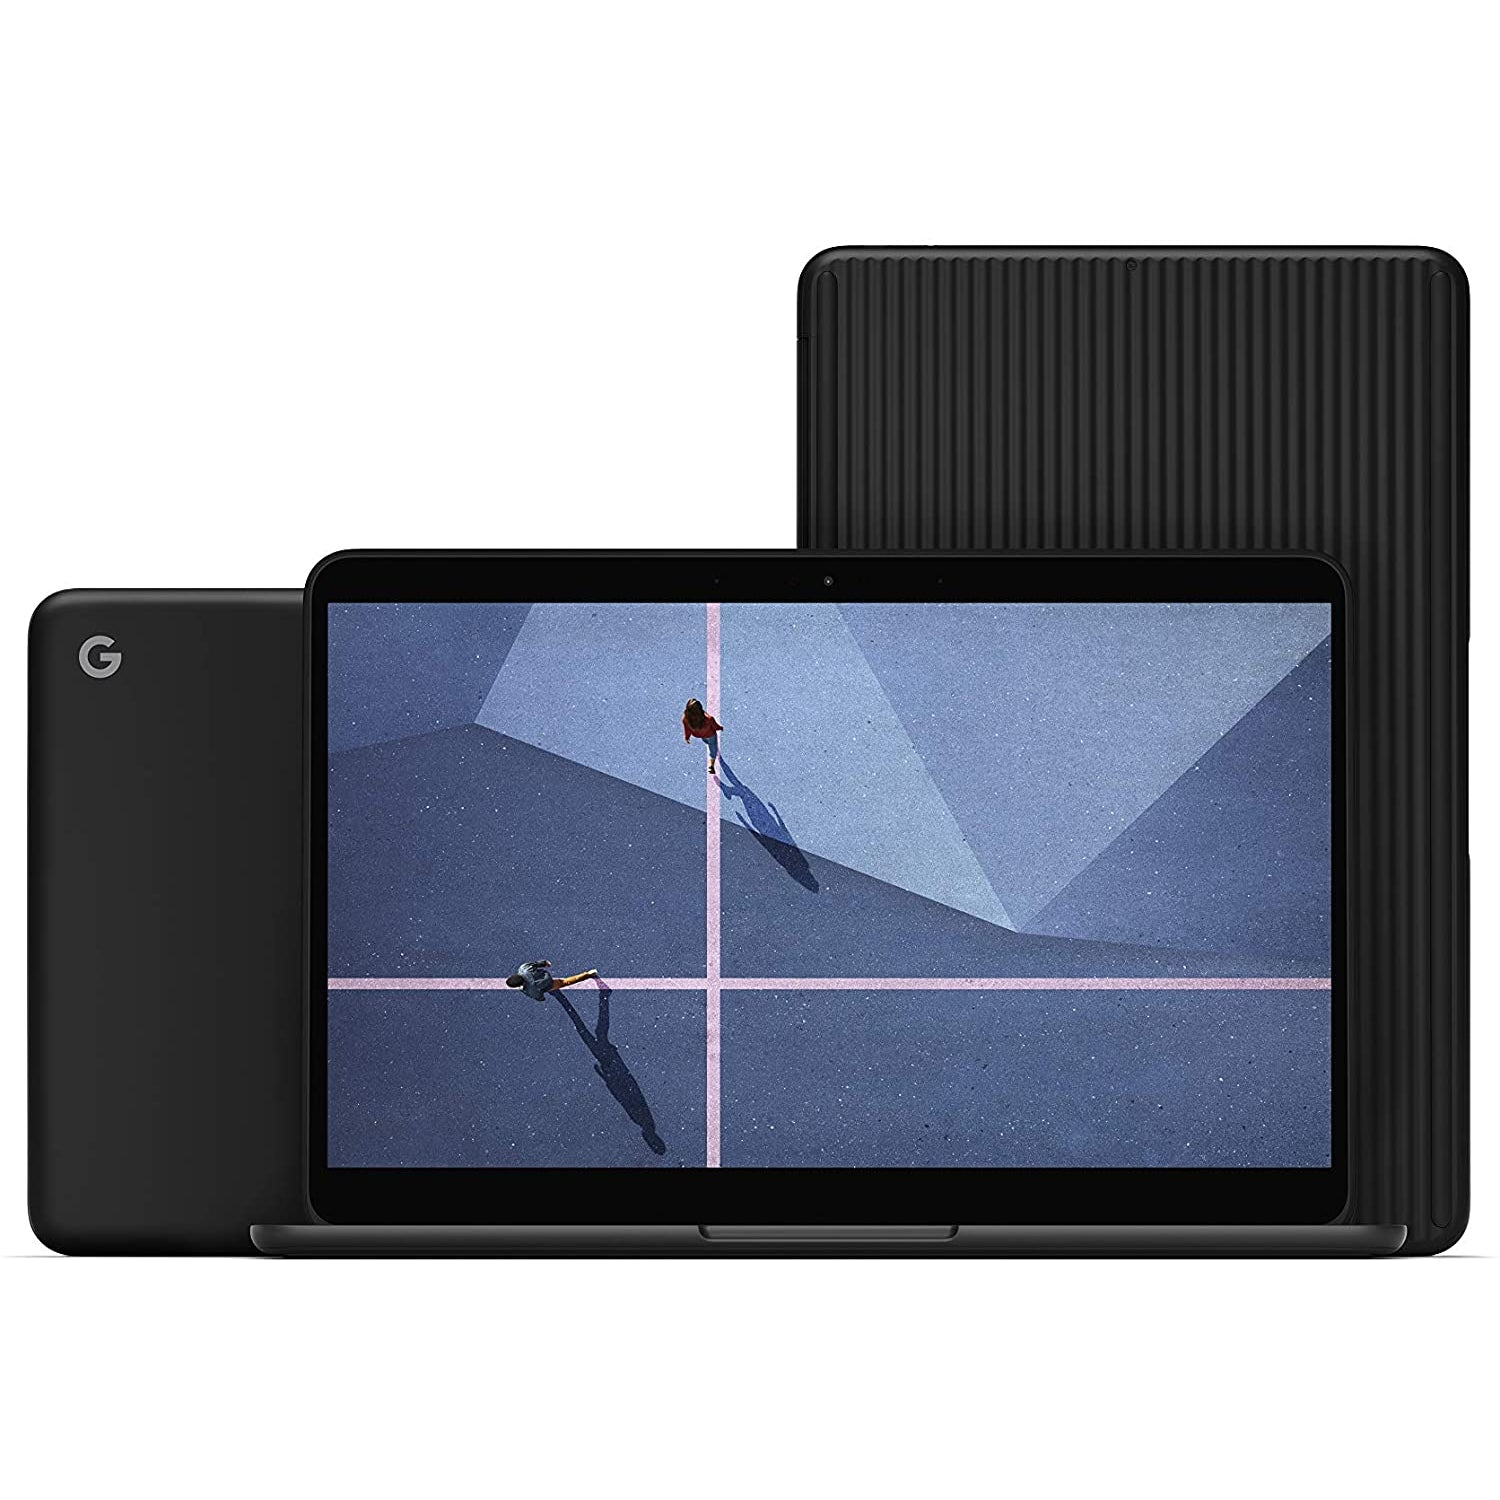 Google Pixelbook Go GA00526-UK Intel Core i5-8200Y 8GB 64GB 13.3” - Black - Refurbished Pristine